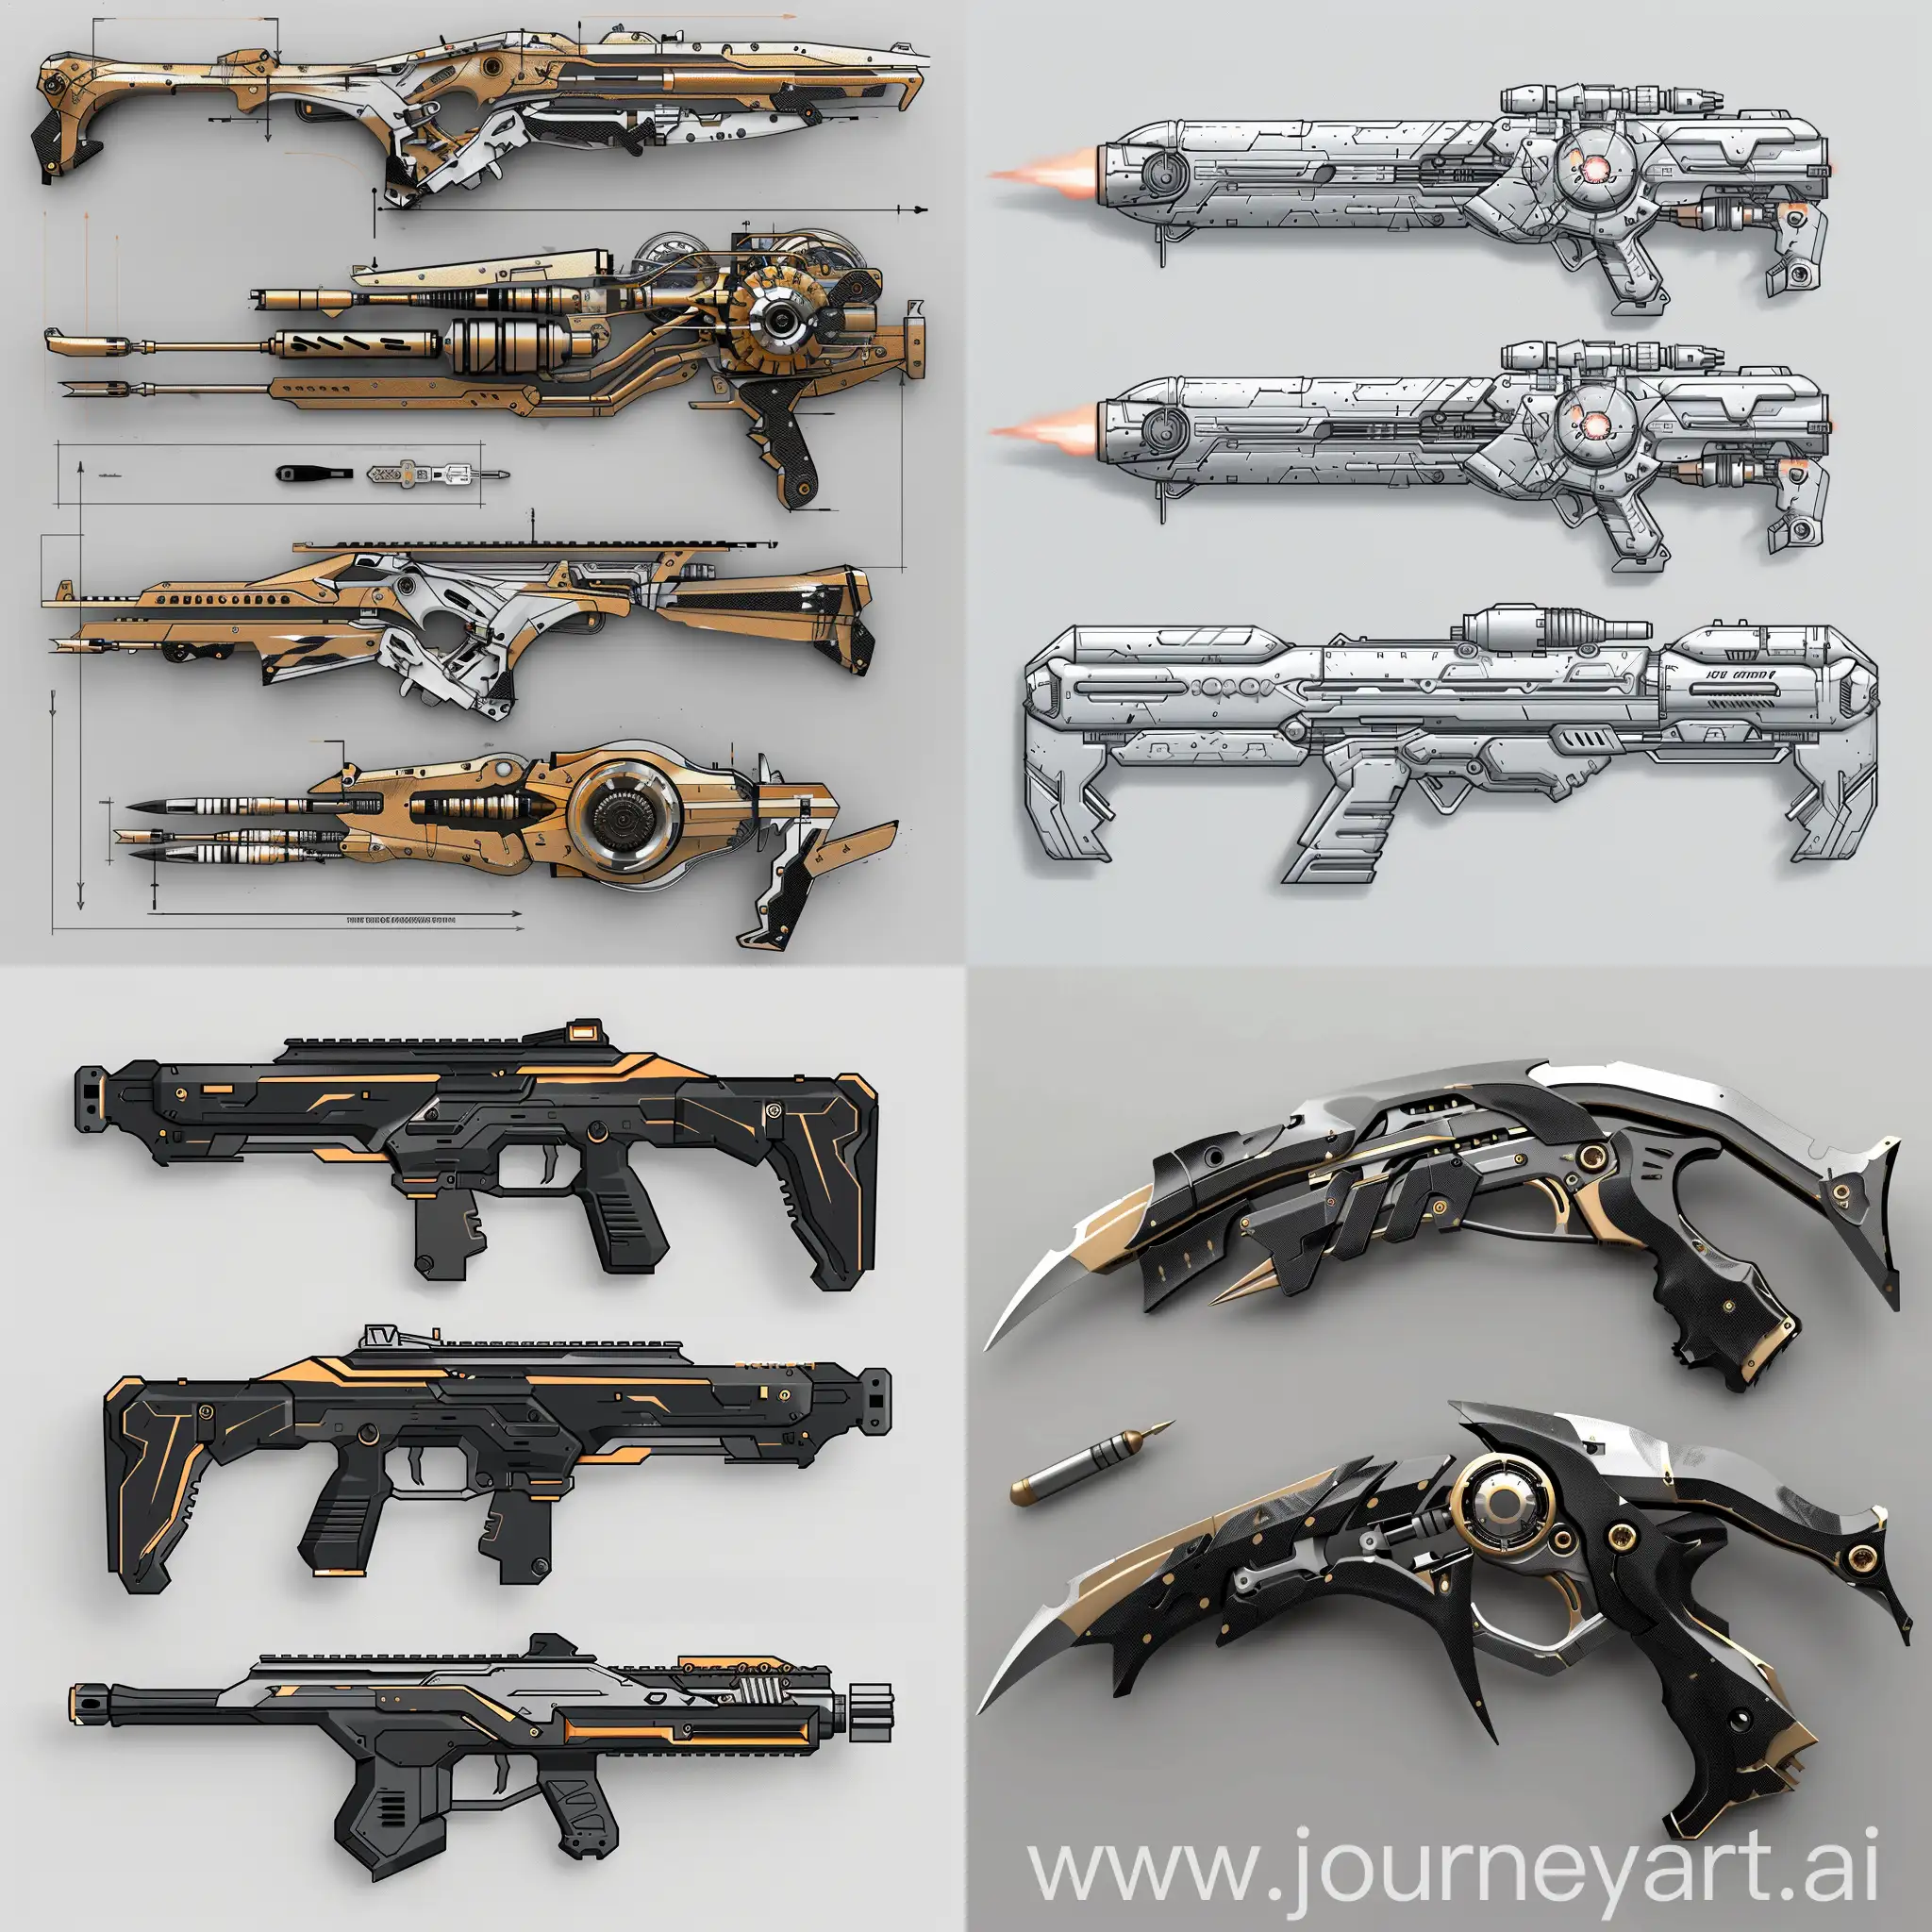 weapon designs inspired by teenage engineering